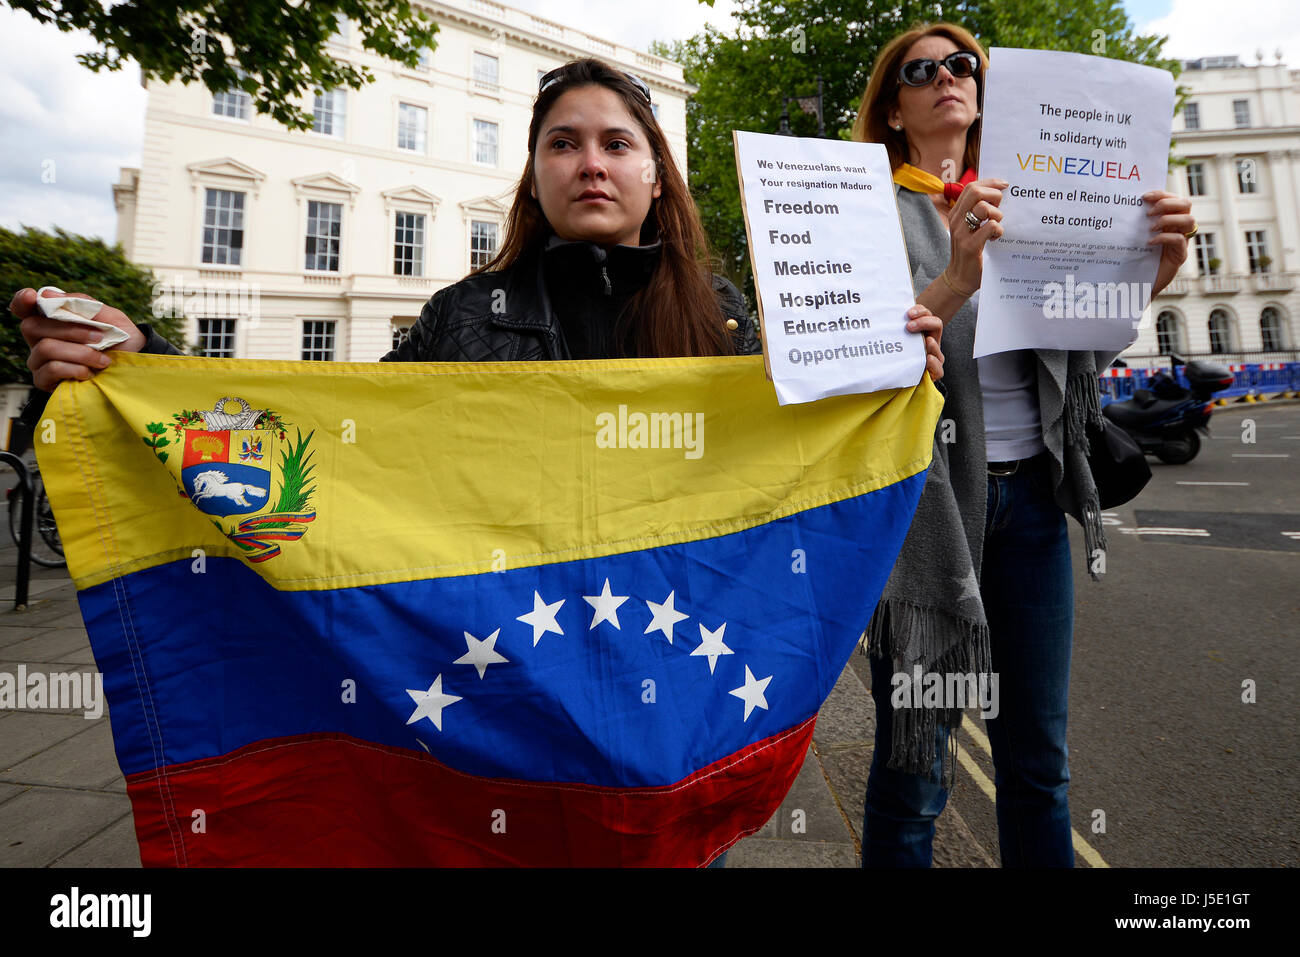 A demonstration protest against Venezuelan dictator Nicolas Maduro took place around the statue of Simon Bolivar in Belgrave Square, London Stock Photo